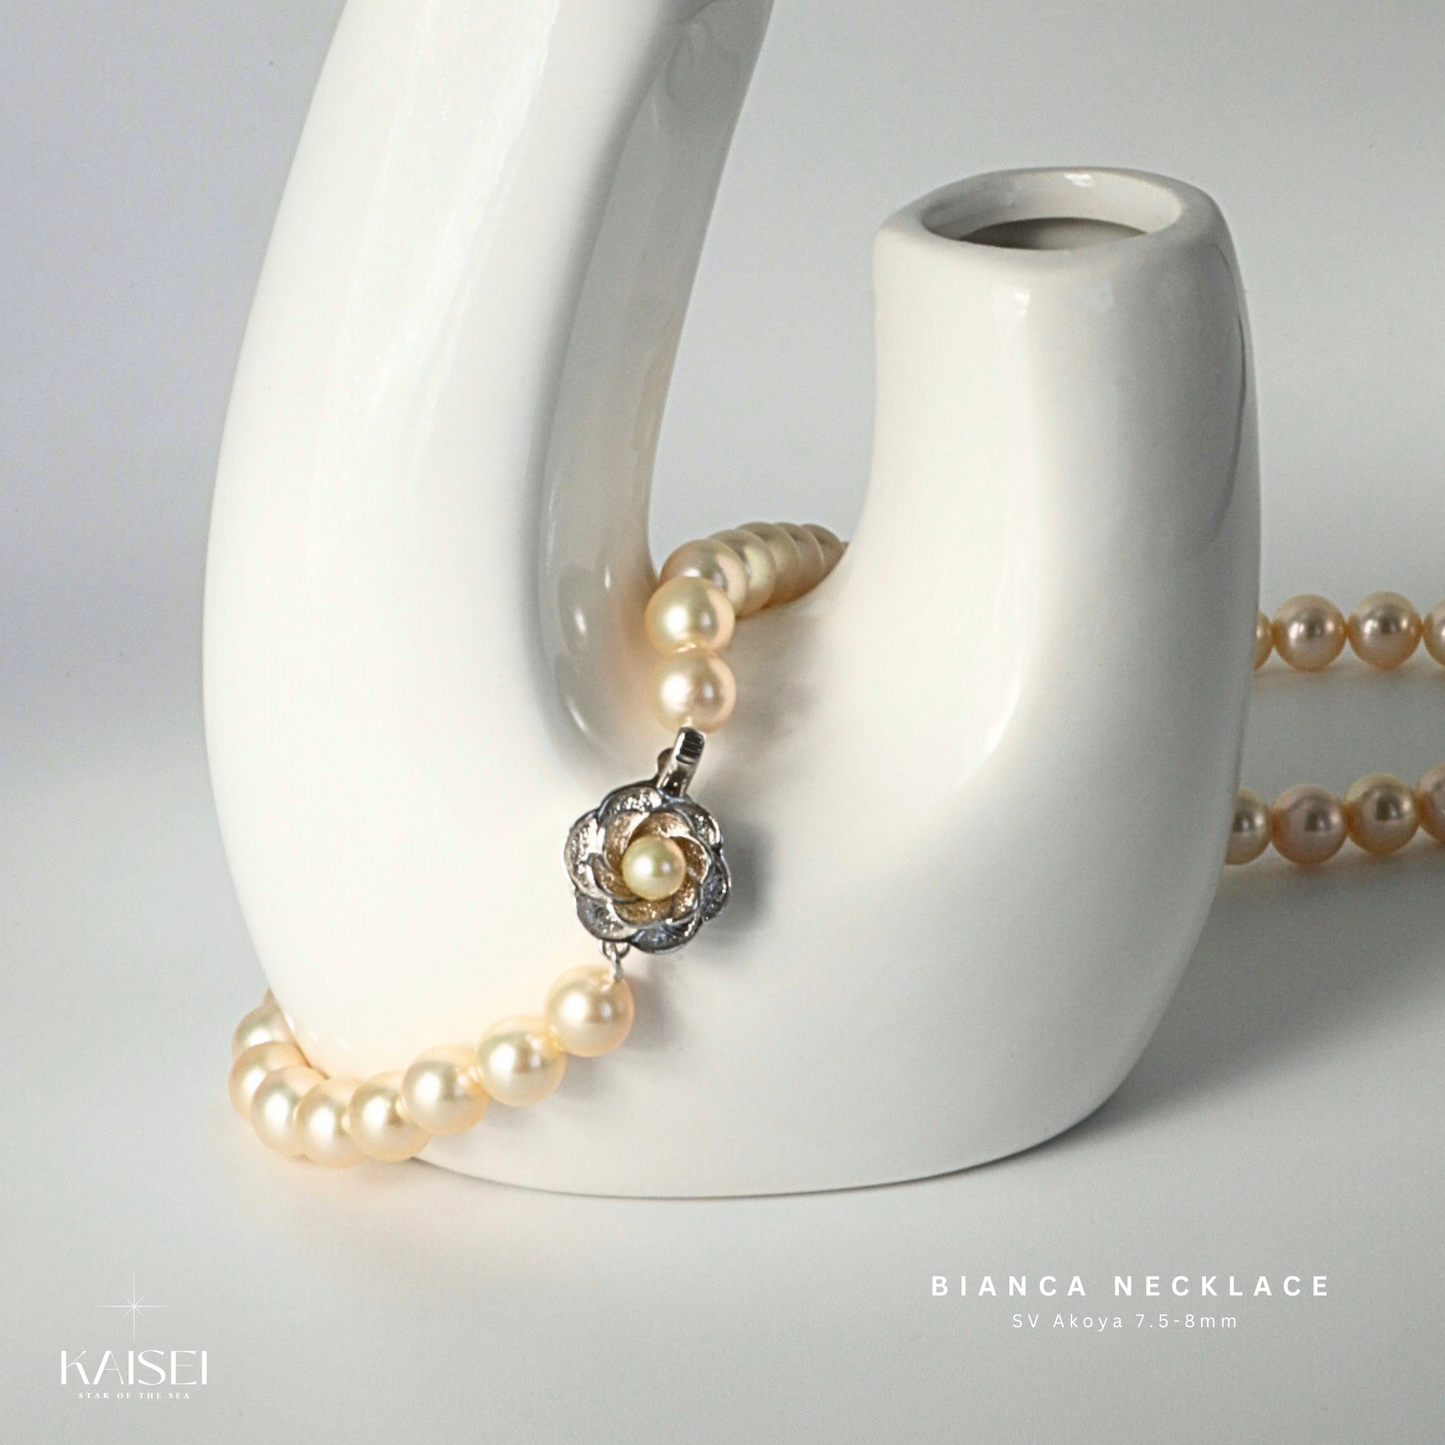 Kaisei Pearl - Bianca Necklace SV Japanese Akoya Pearl 7.5-8mm Jewelry